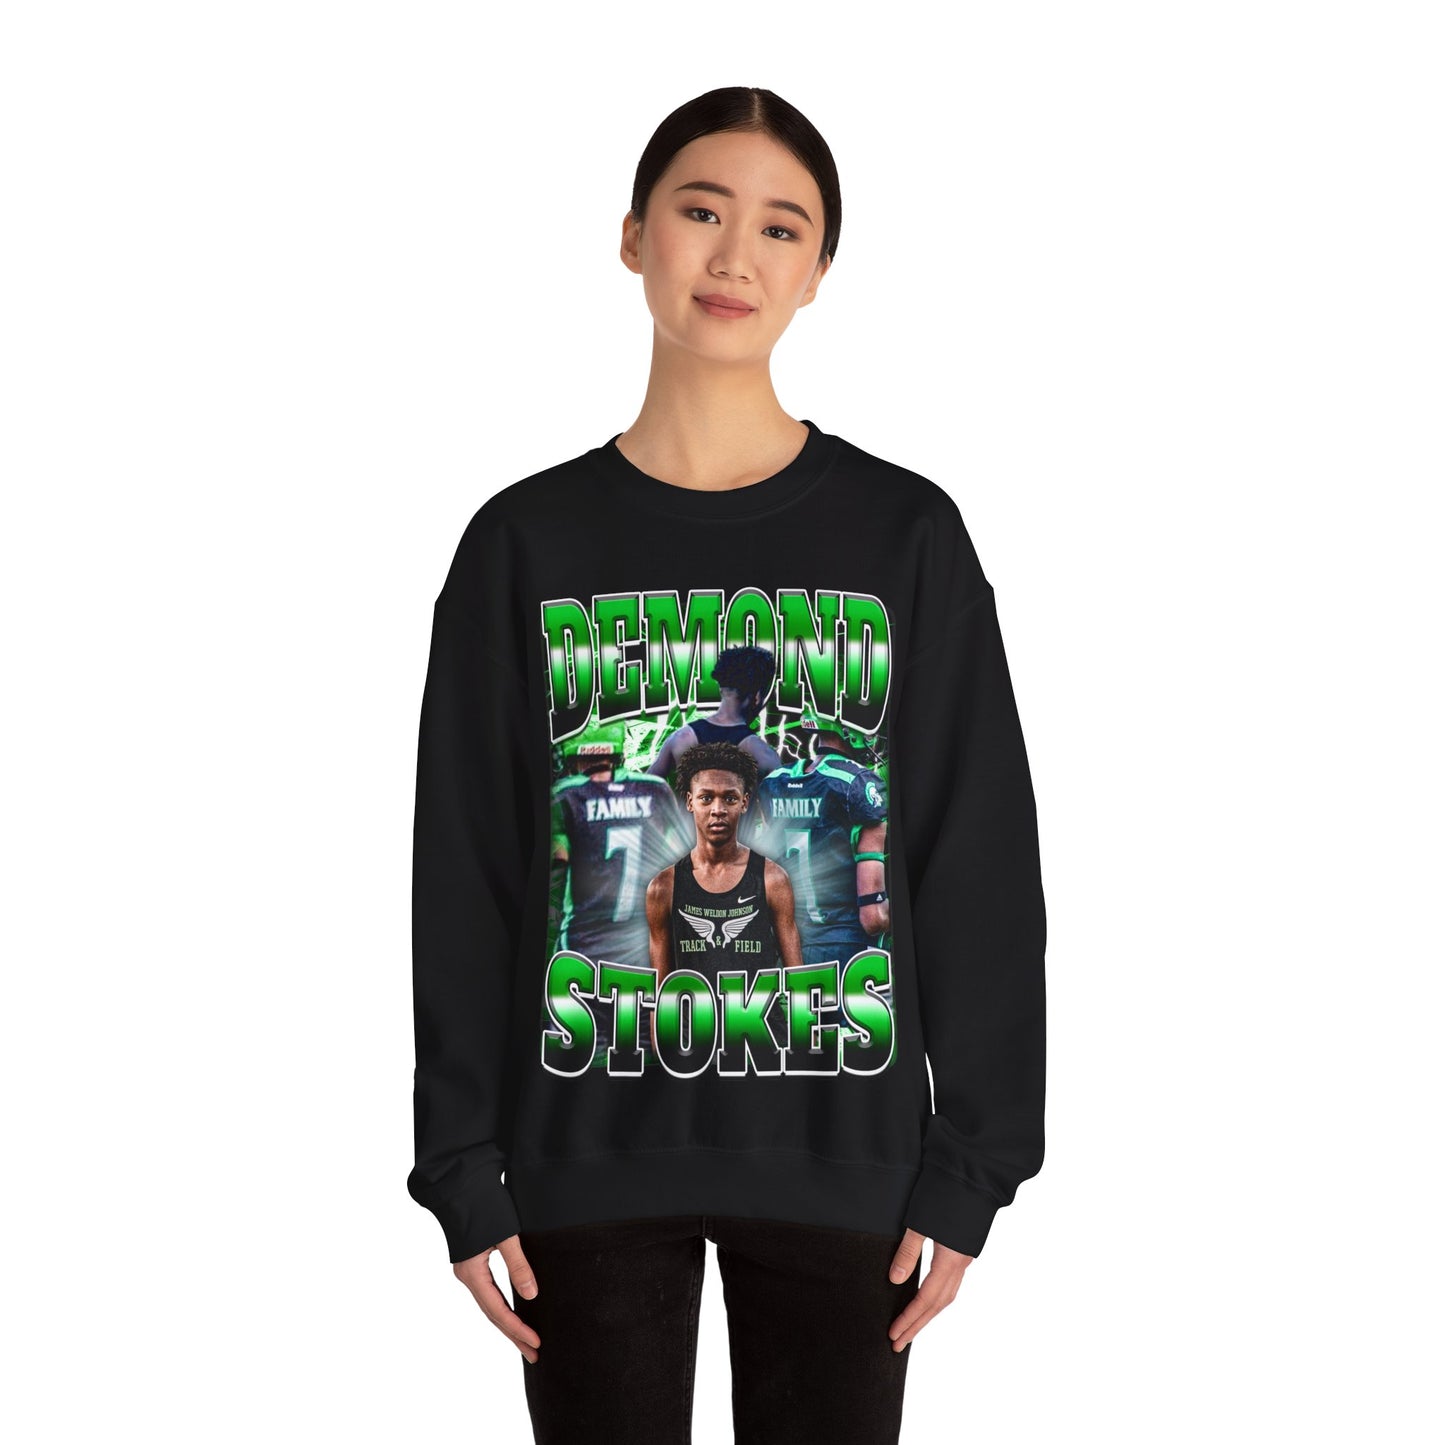 Demond Stokes Crewneck Sweatshirt